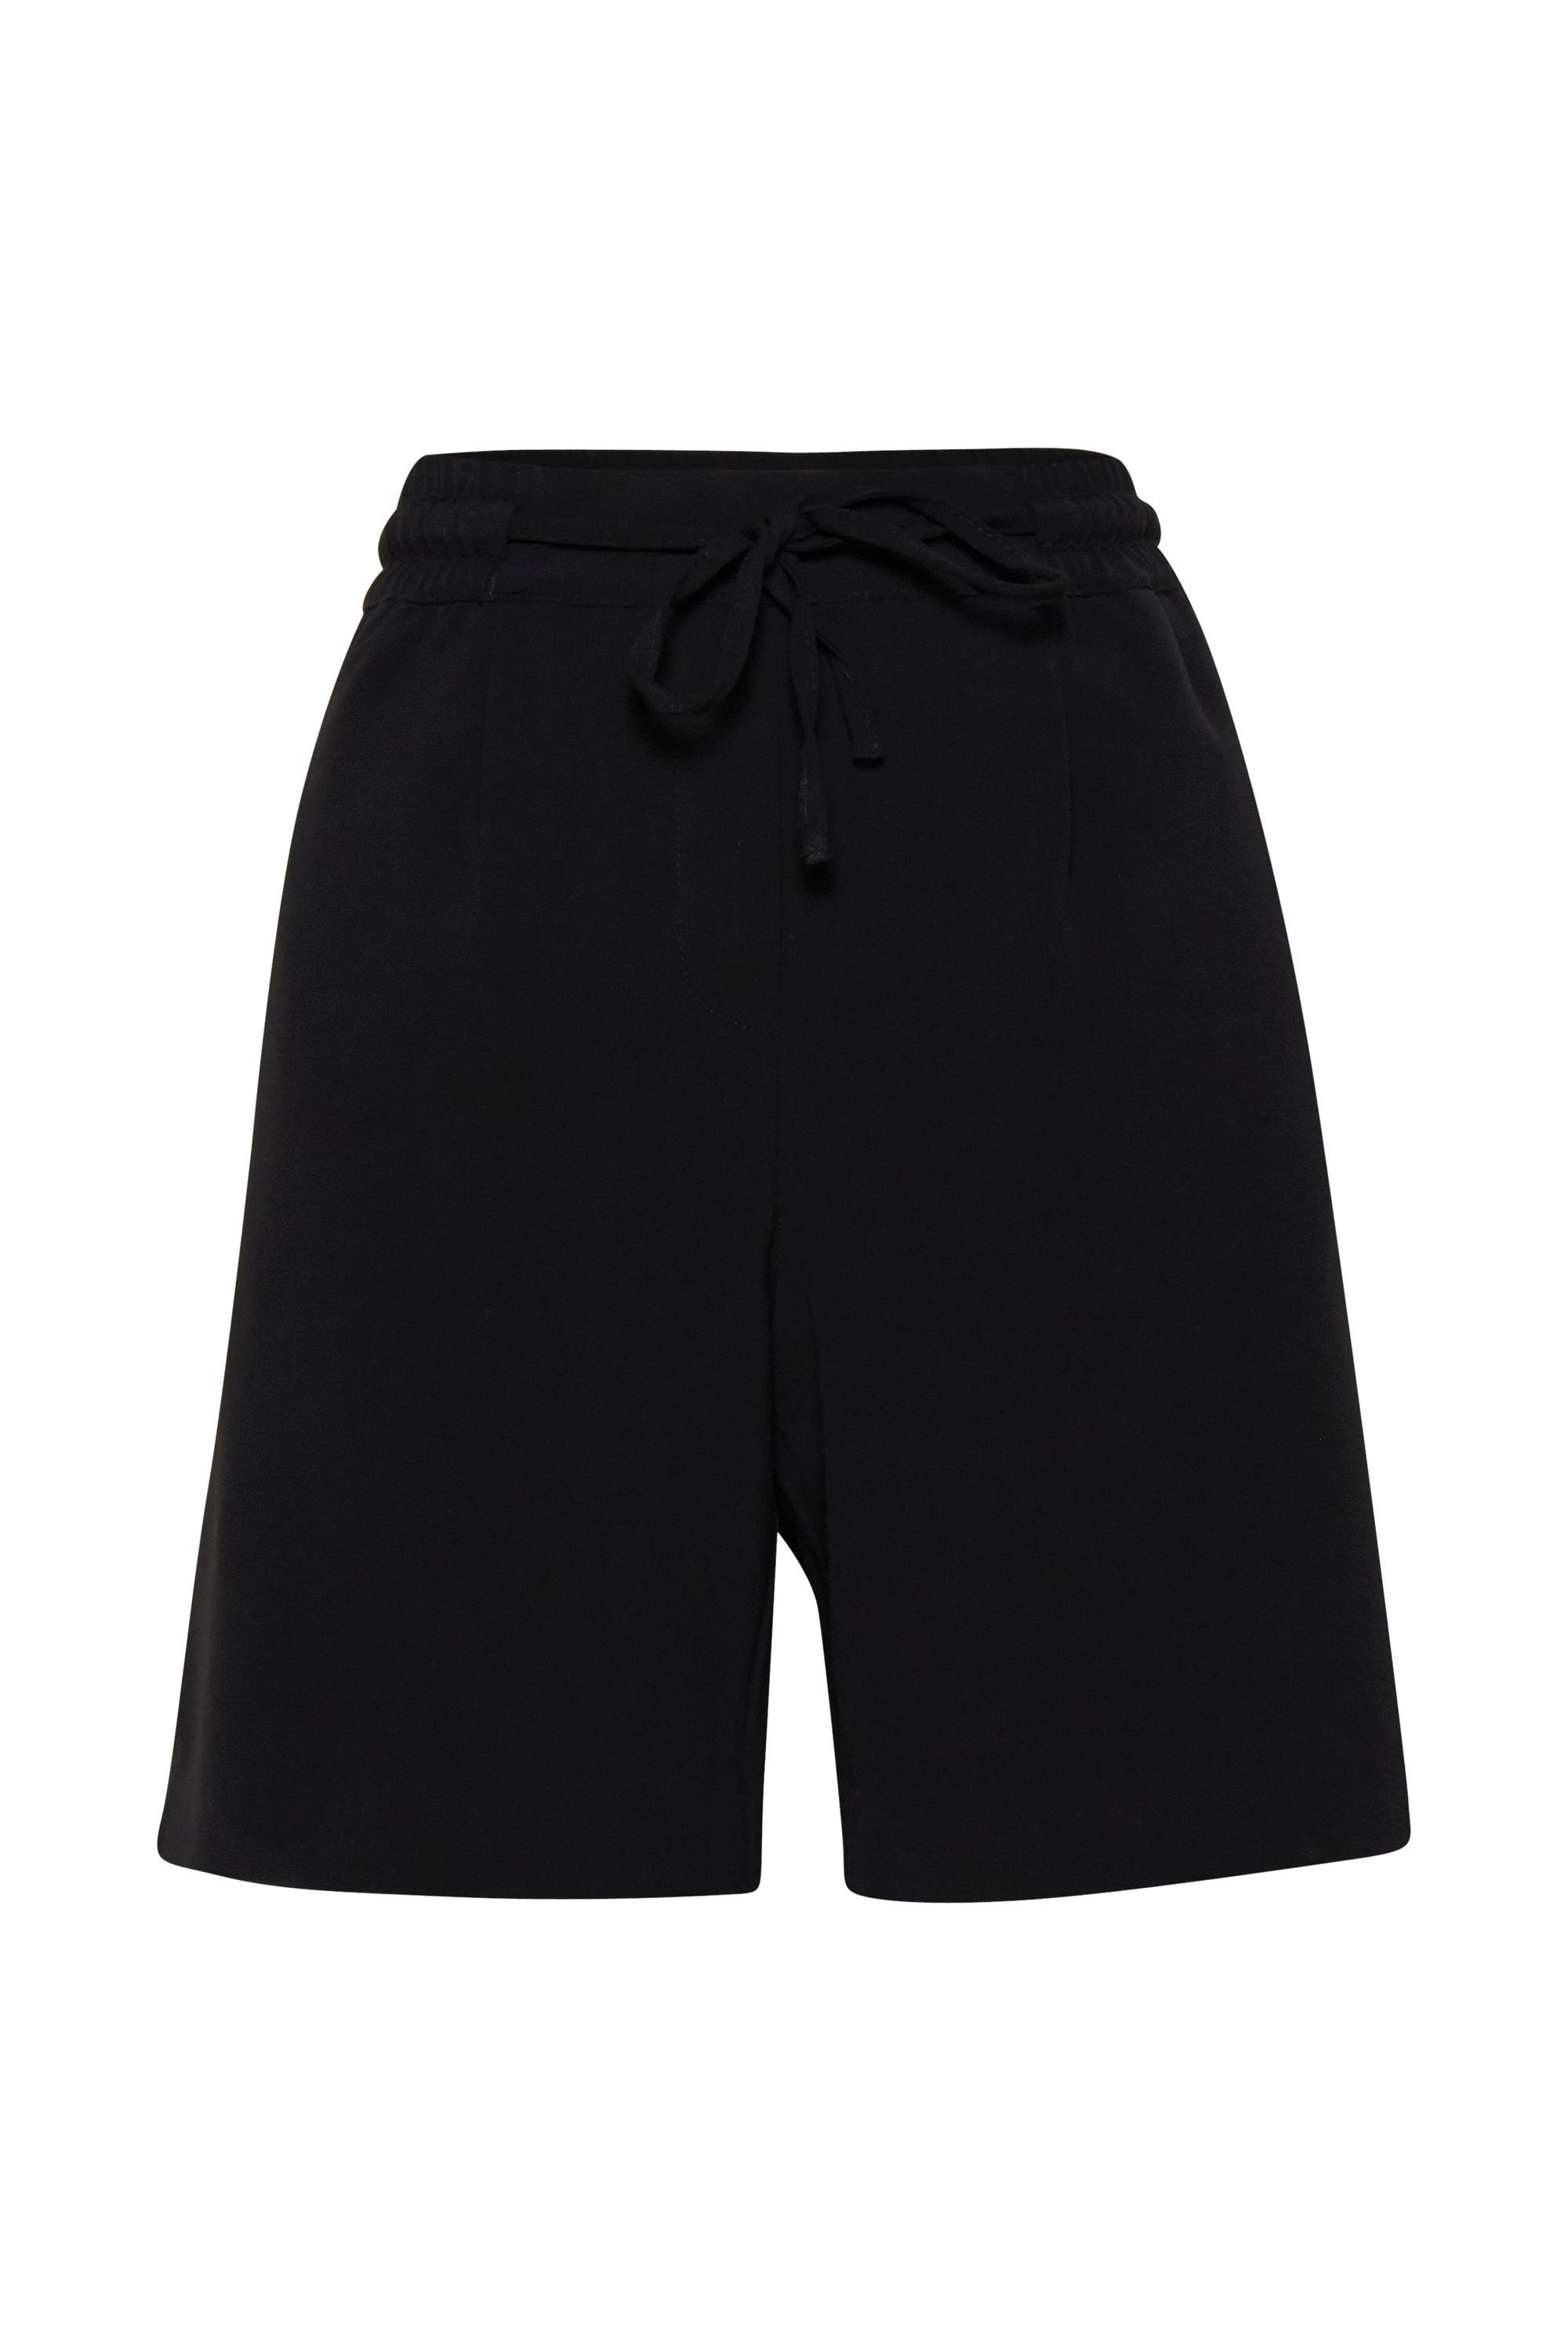 Shorts 20808201 SHORTS (80001) - BYDANTA Kordeln Black b.young mit Shorts